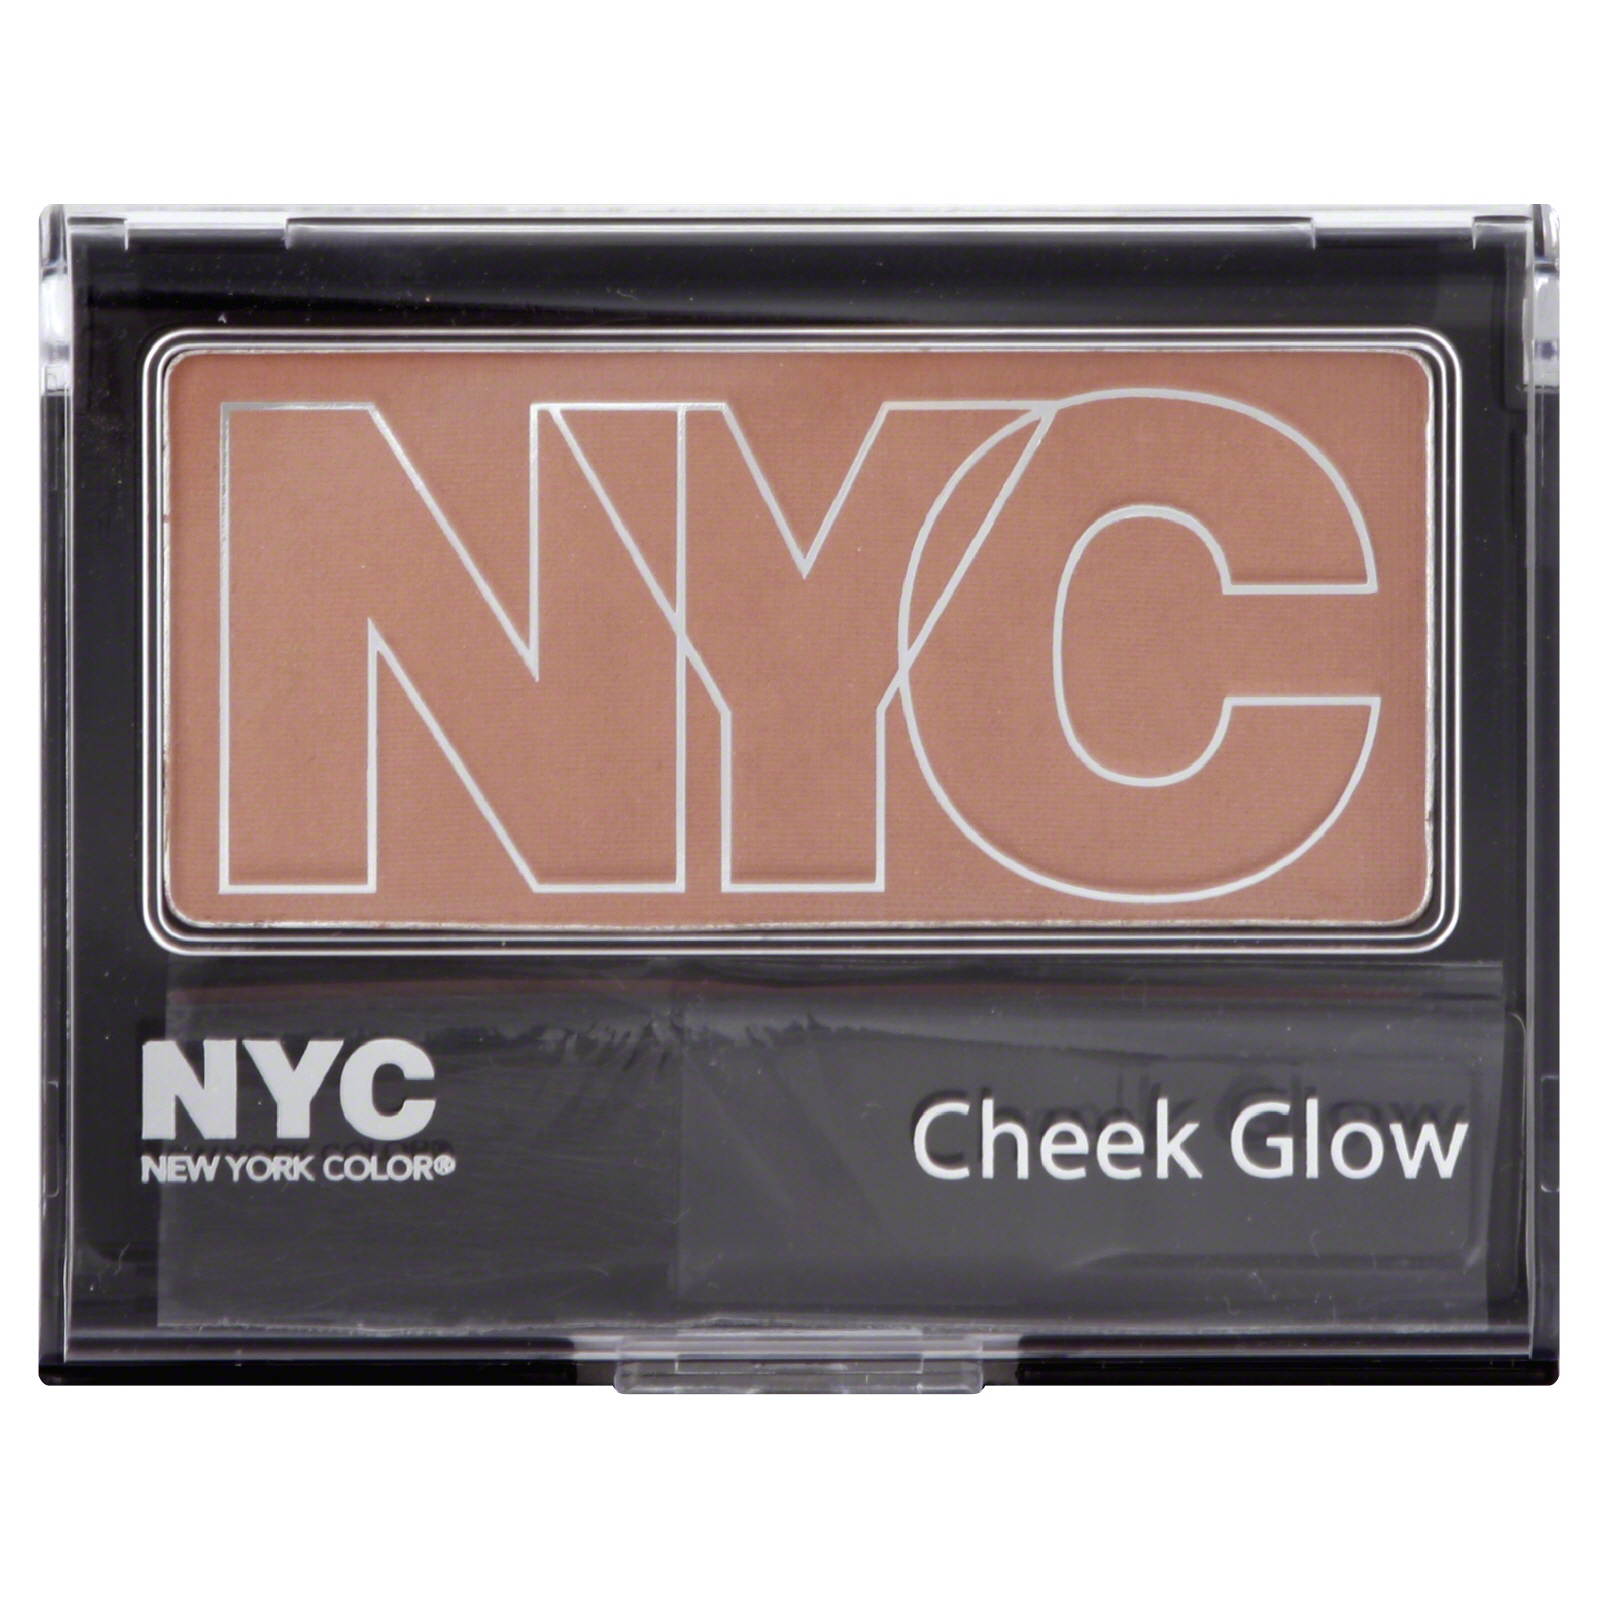 New York Color Blush Powder Cheek Glow